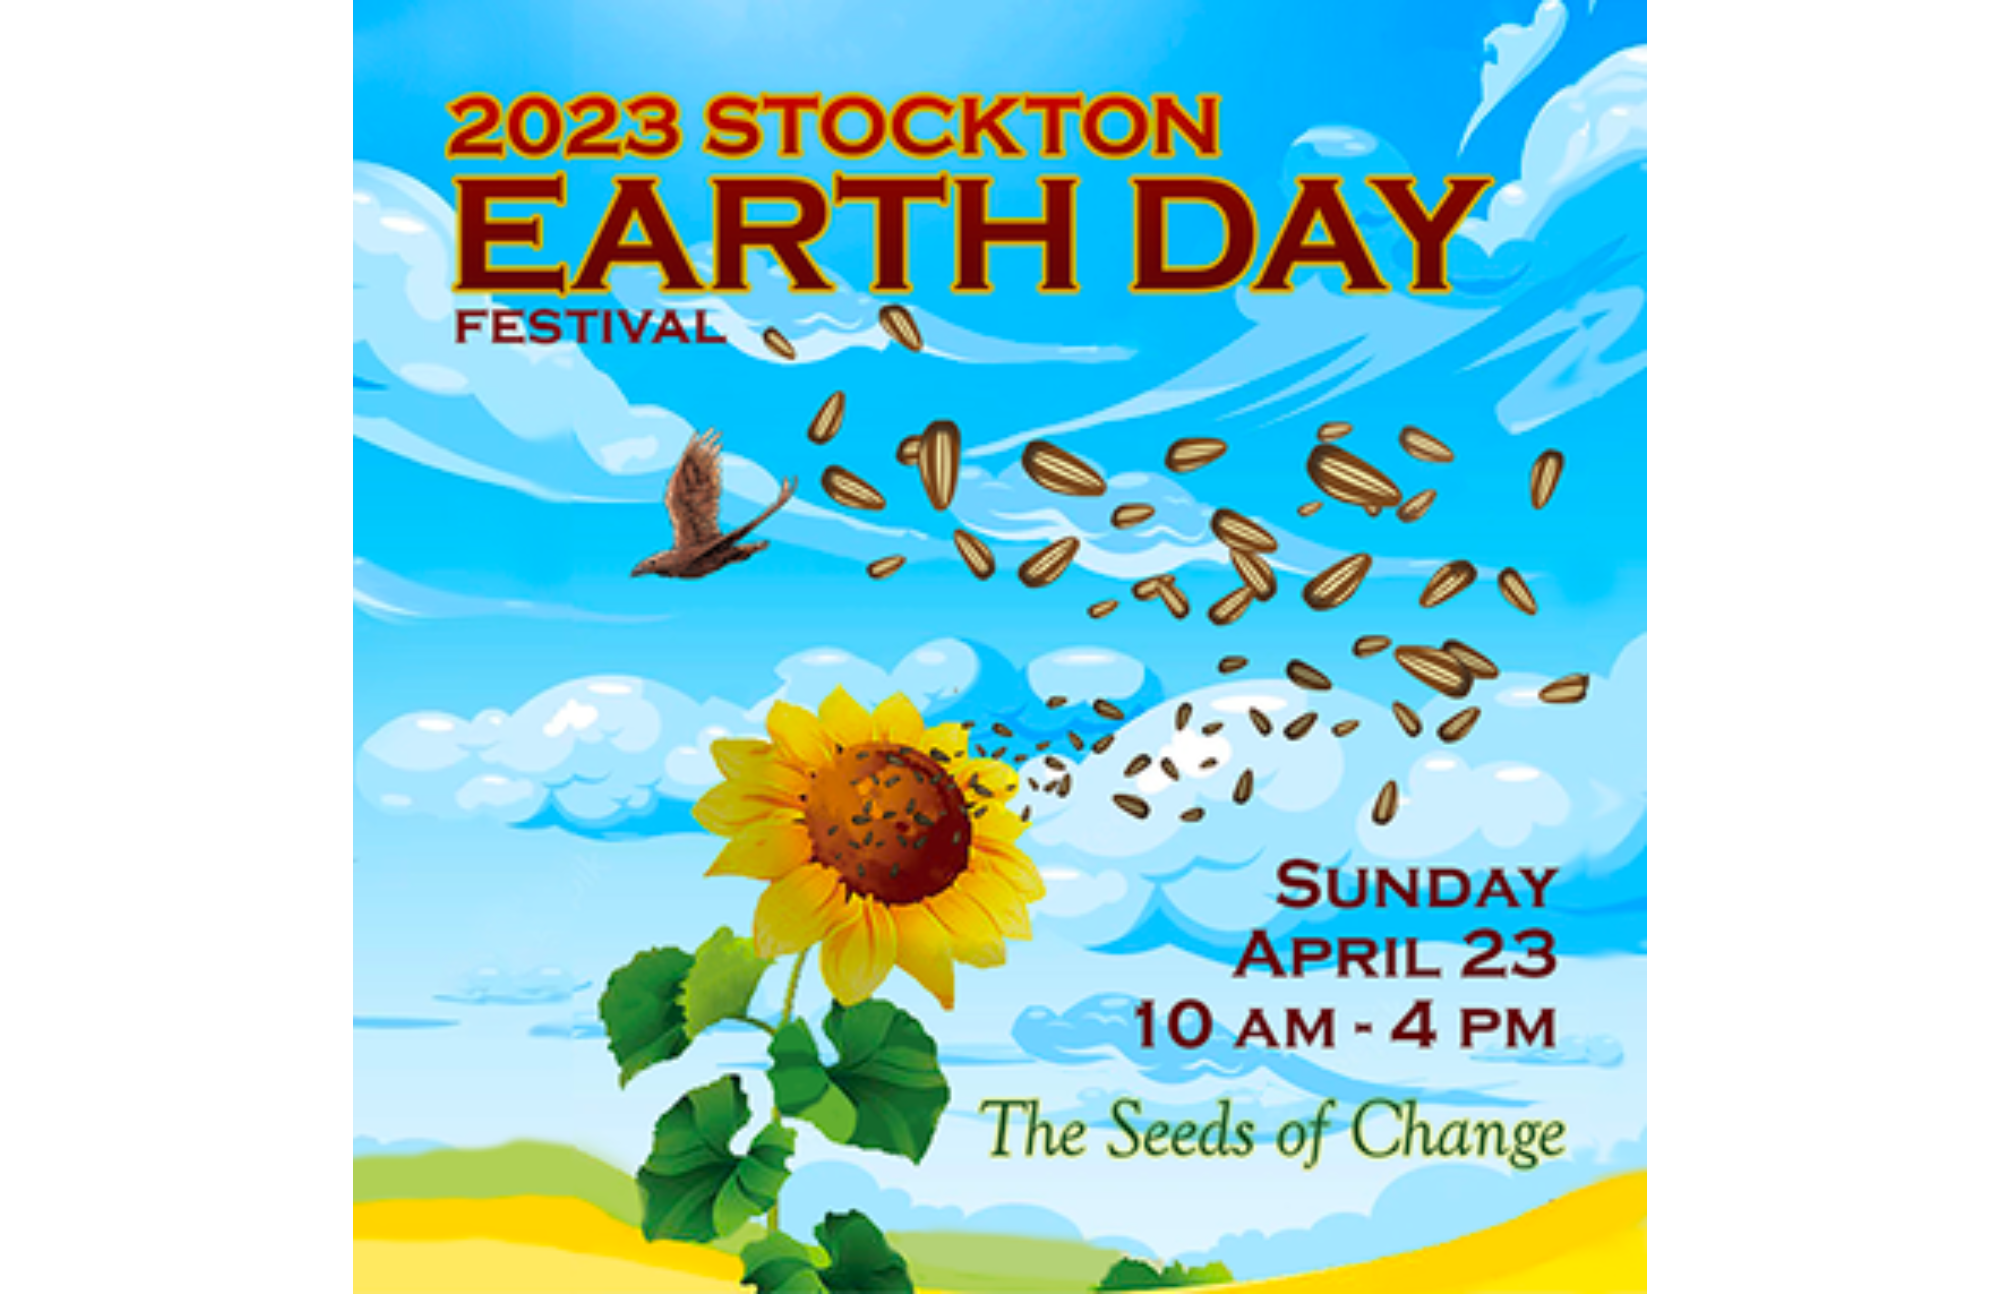 Stockton Earth Day 2023 festival poster